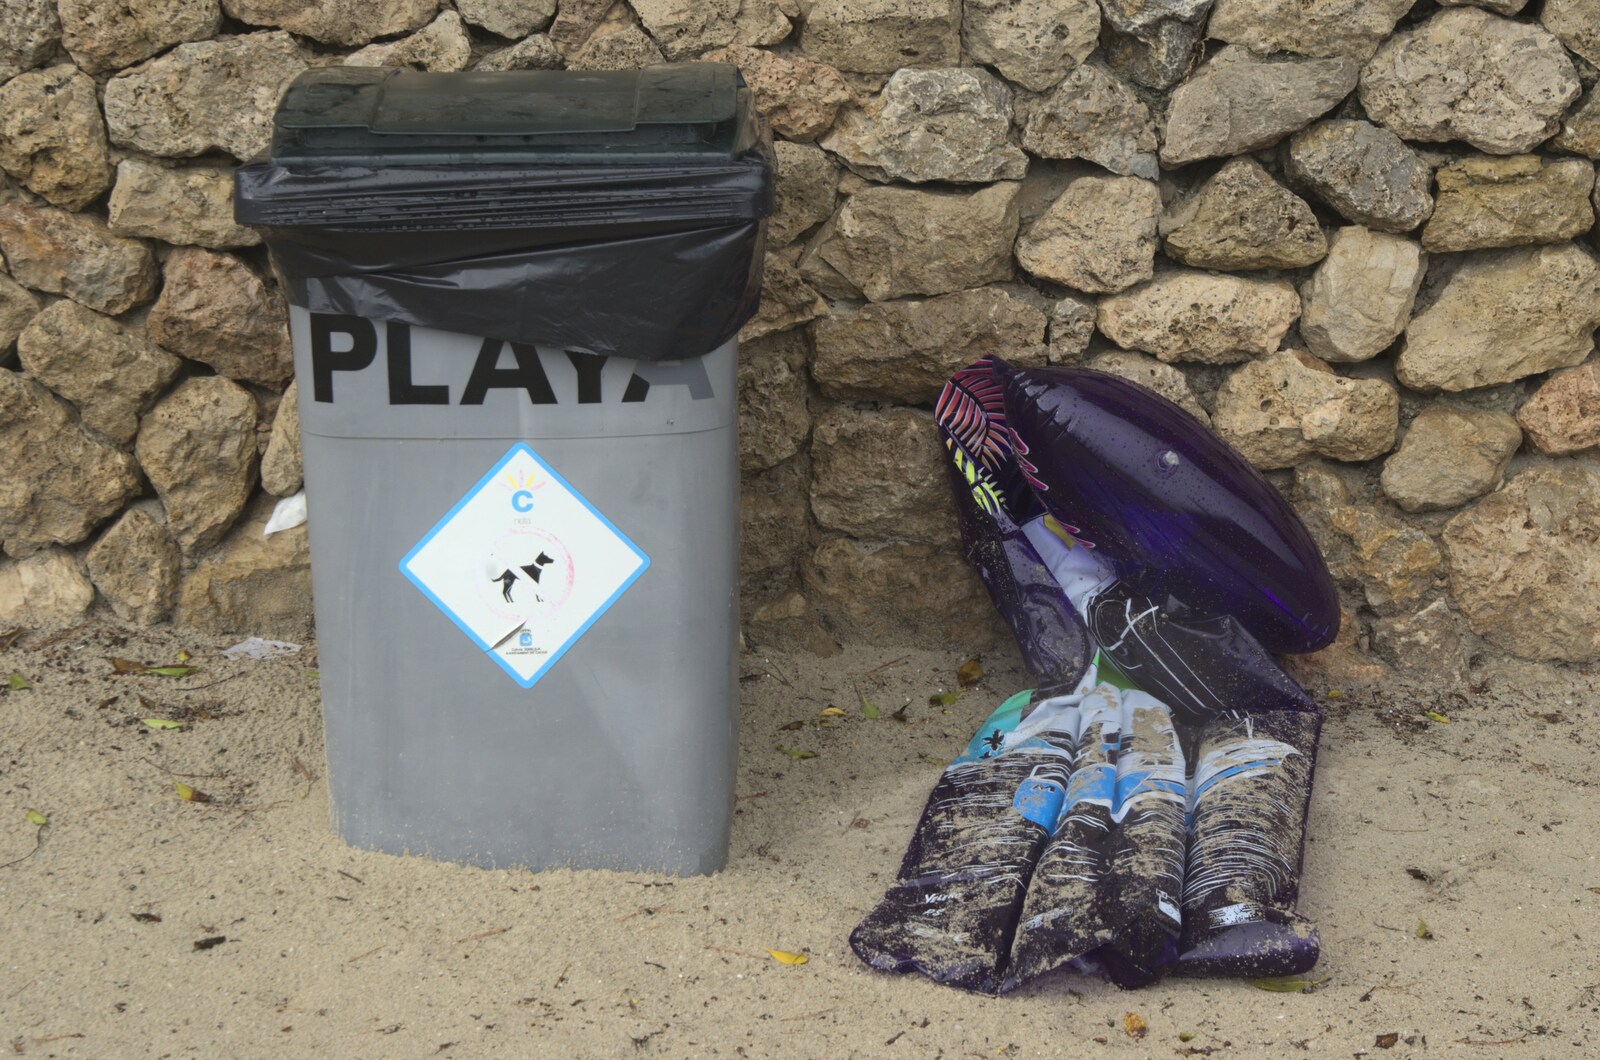 Beach bin and a discarded lilo from A Postcard From Palmanova, Mallorca, Spain - 21st September 2009